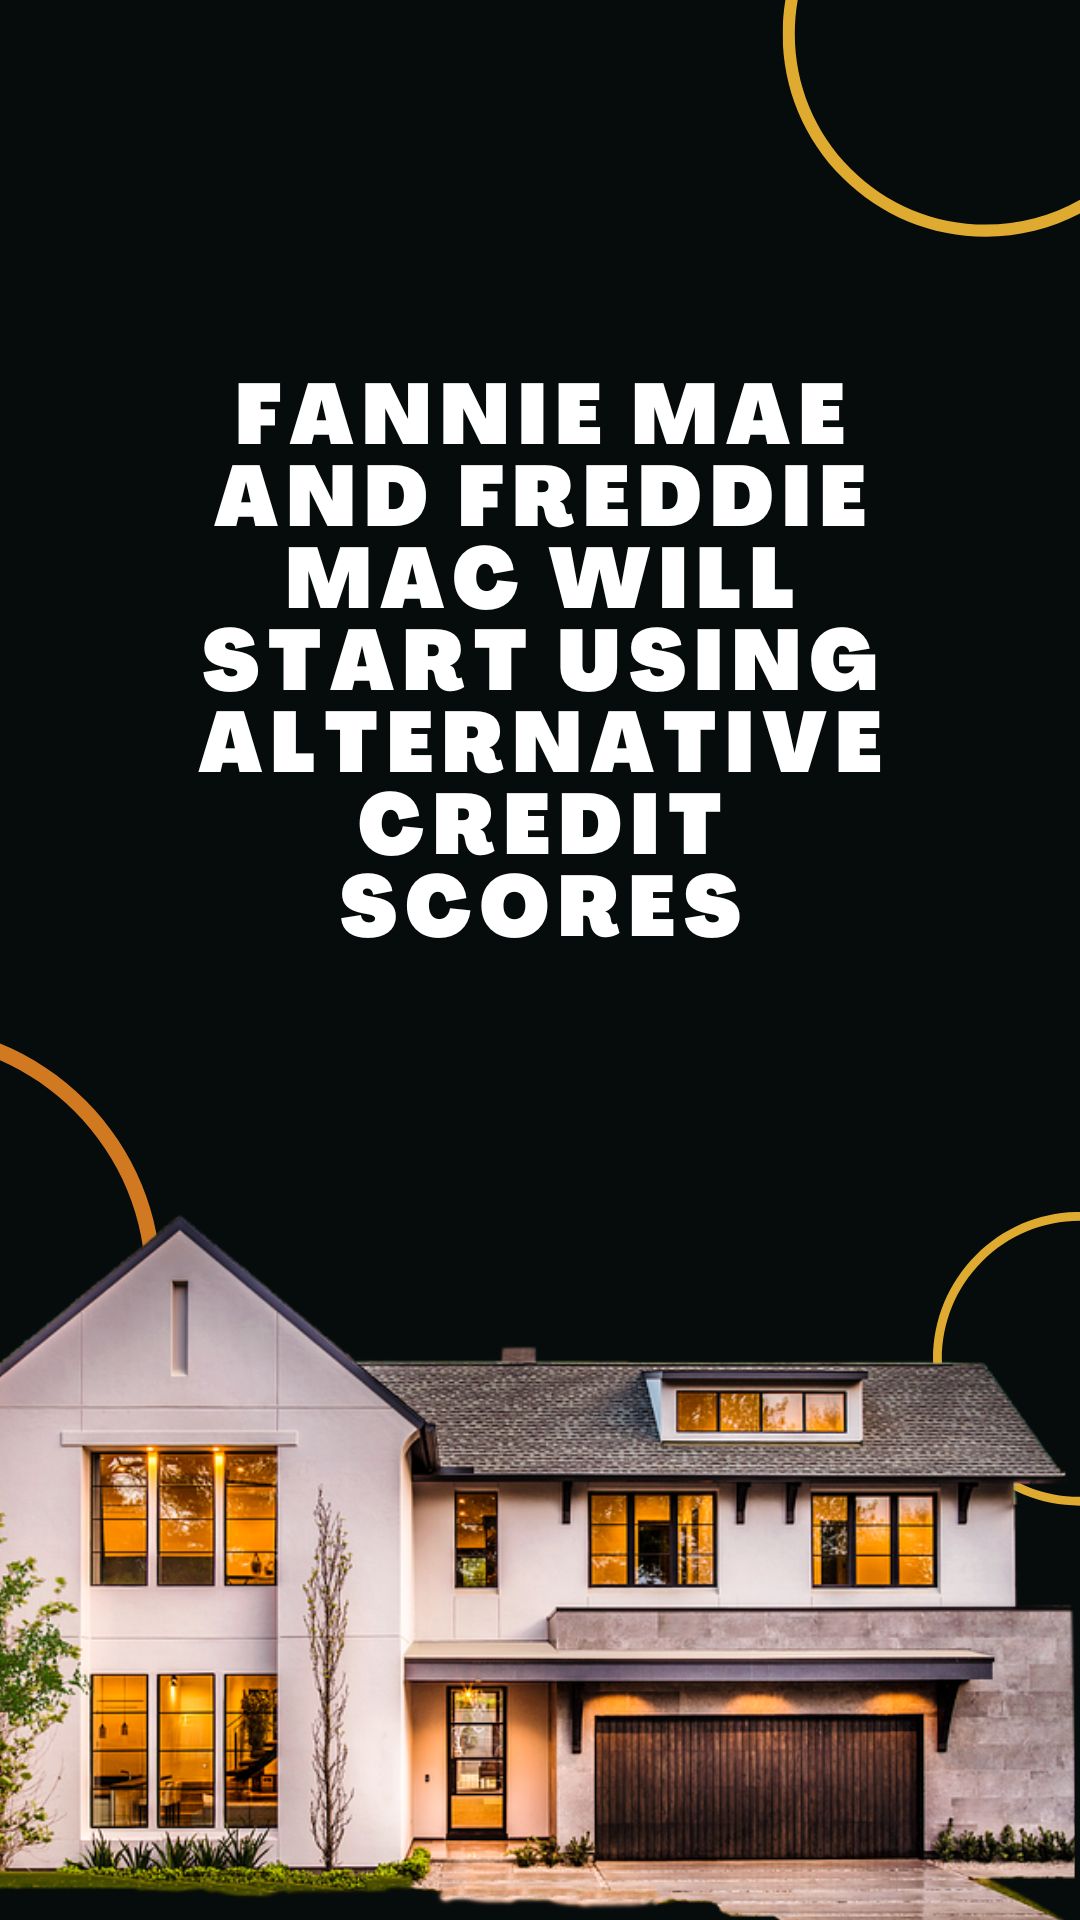 Fannie Mae and Freddie Mac Will Start Using Alternative Credit Scores